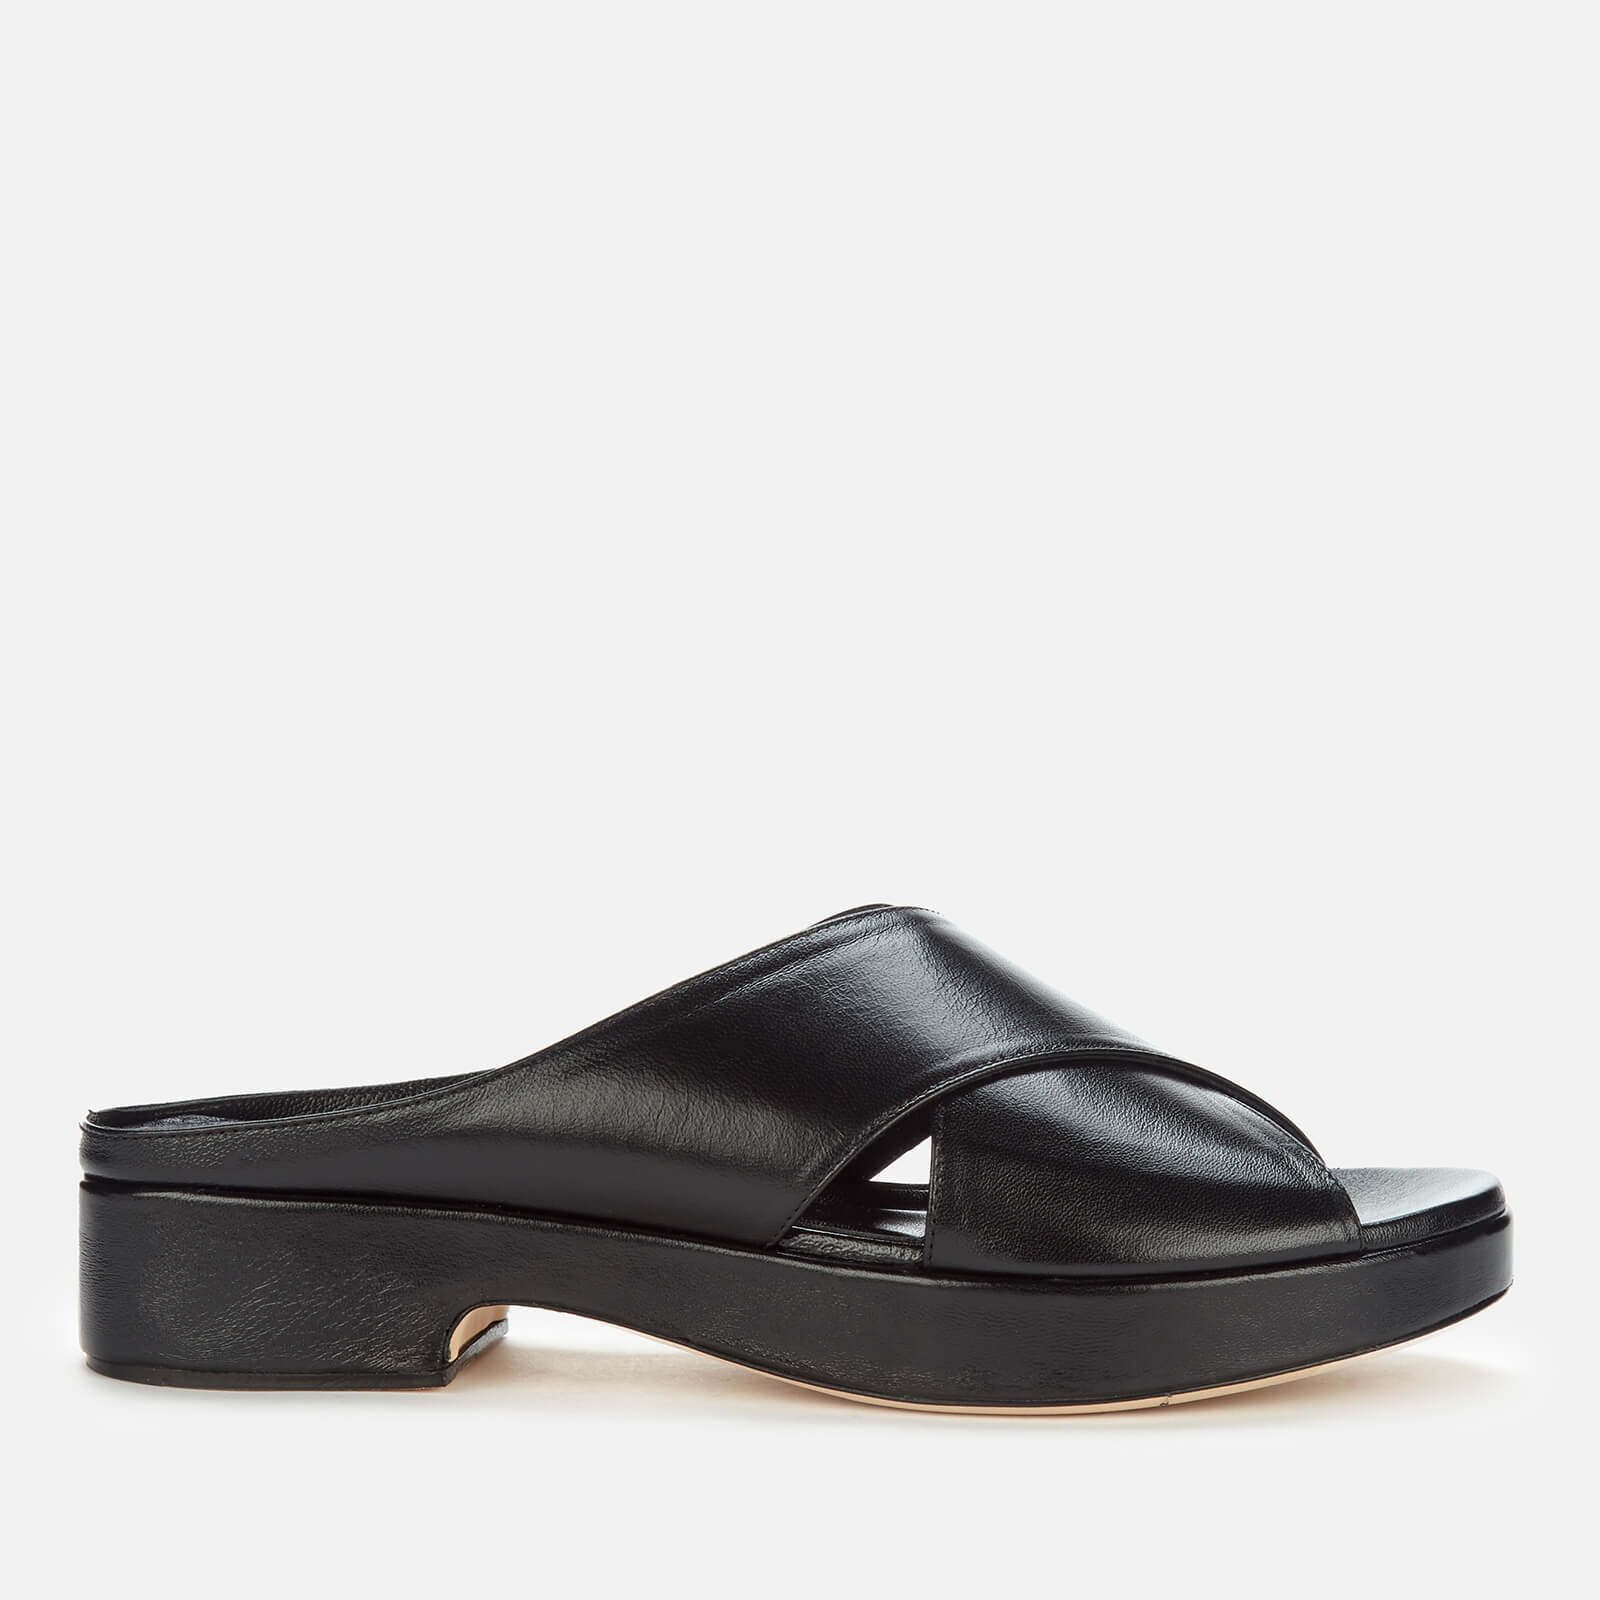 BY FAR Women's Iggy Leather Flat Sandals - Black - UK 3